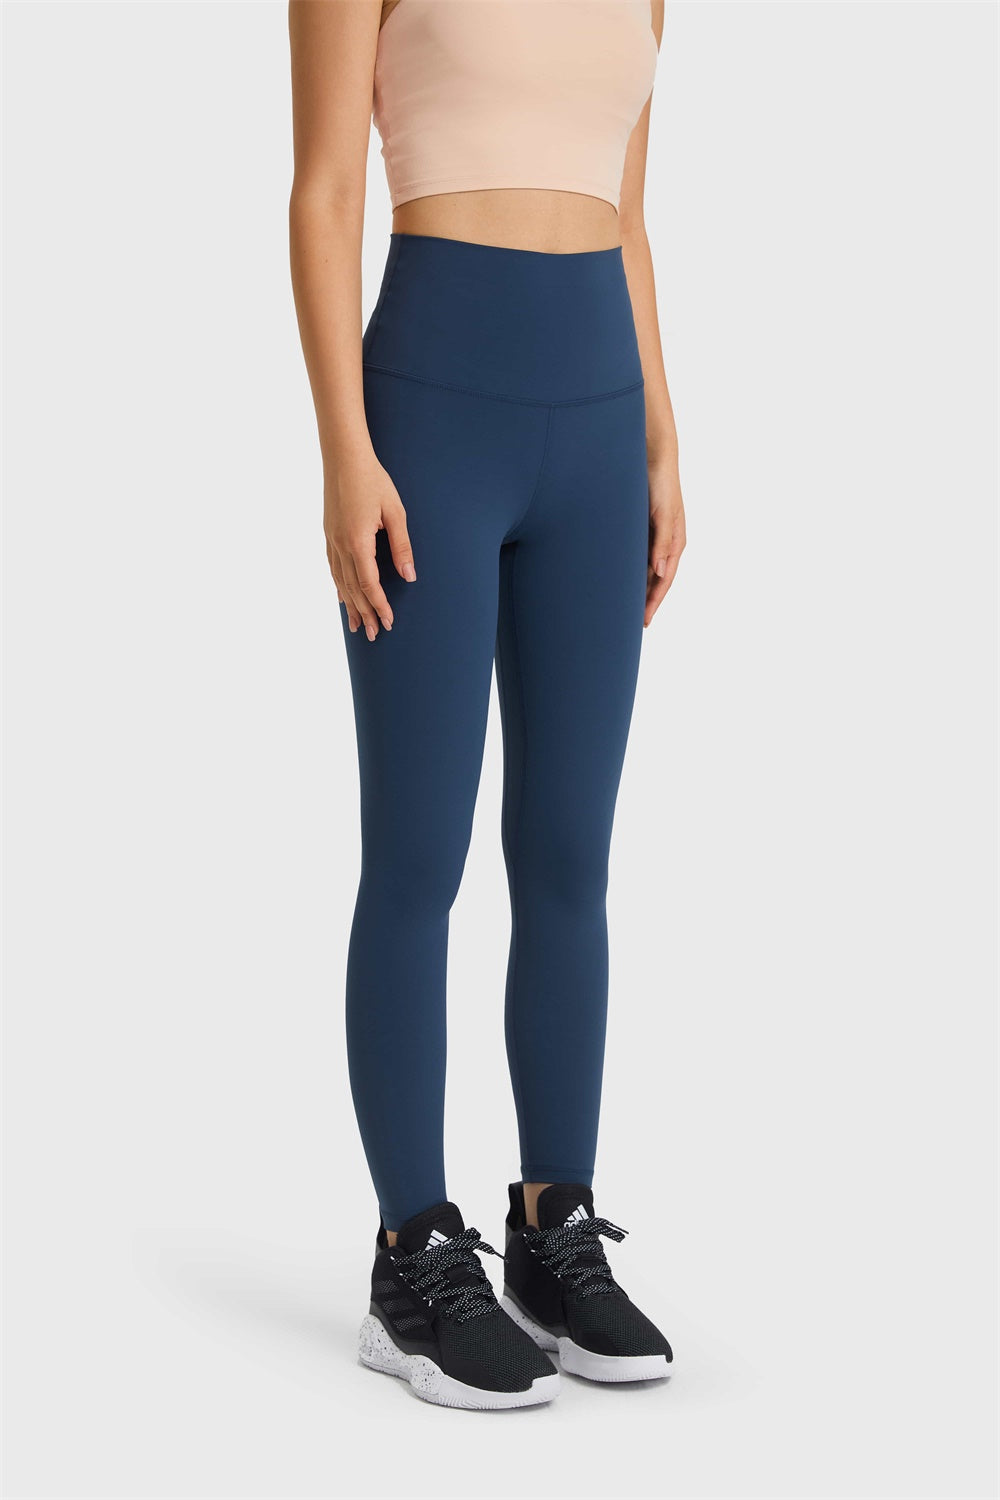 Feel Like Skin Elastic Waistband Yoga Leggings Print on any thing USA/STOD clothes